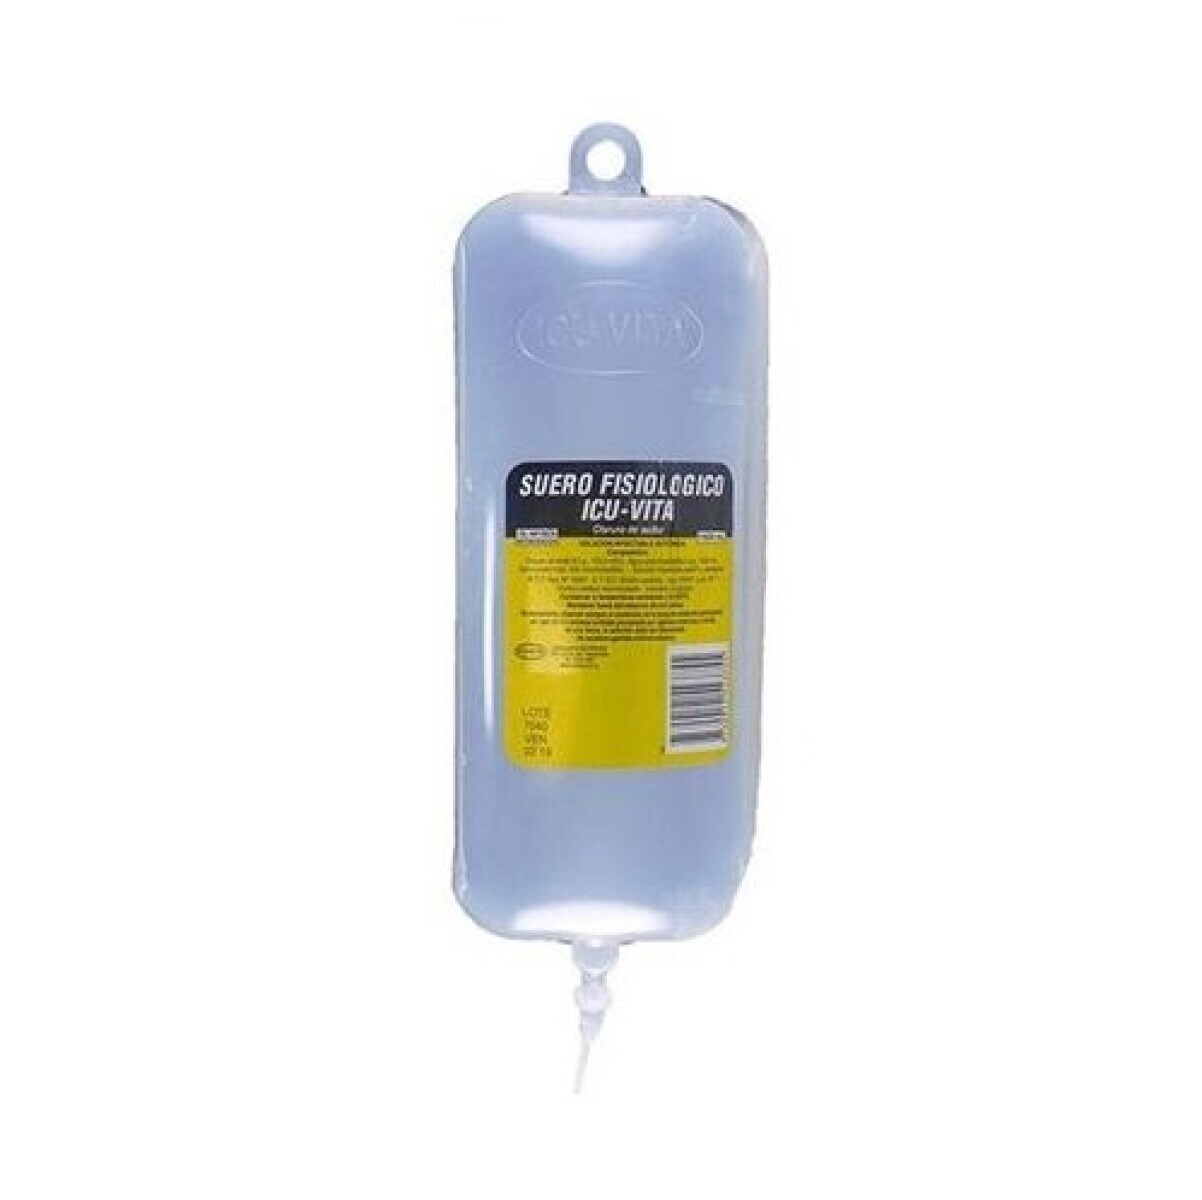 Suero fisiológico/ Isotónico Icu Vita - 500 ml 